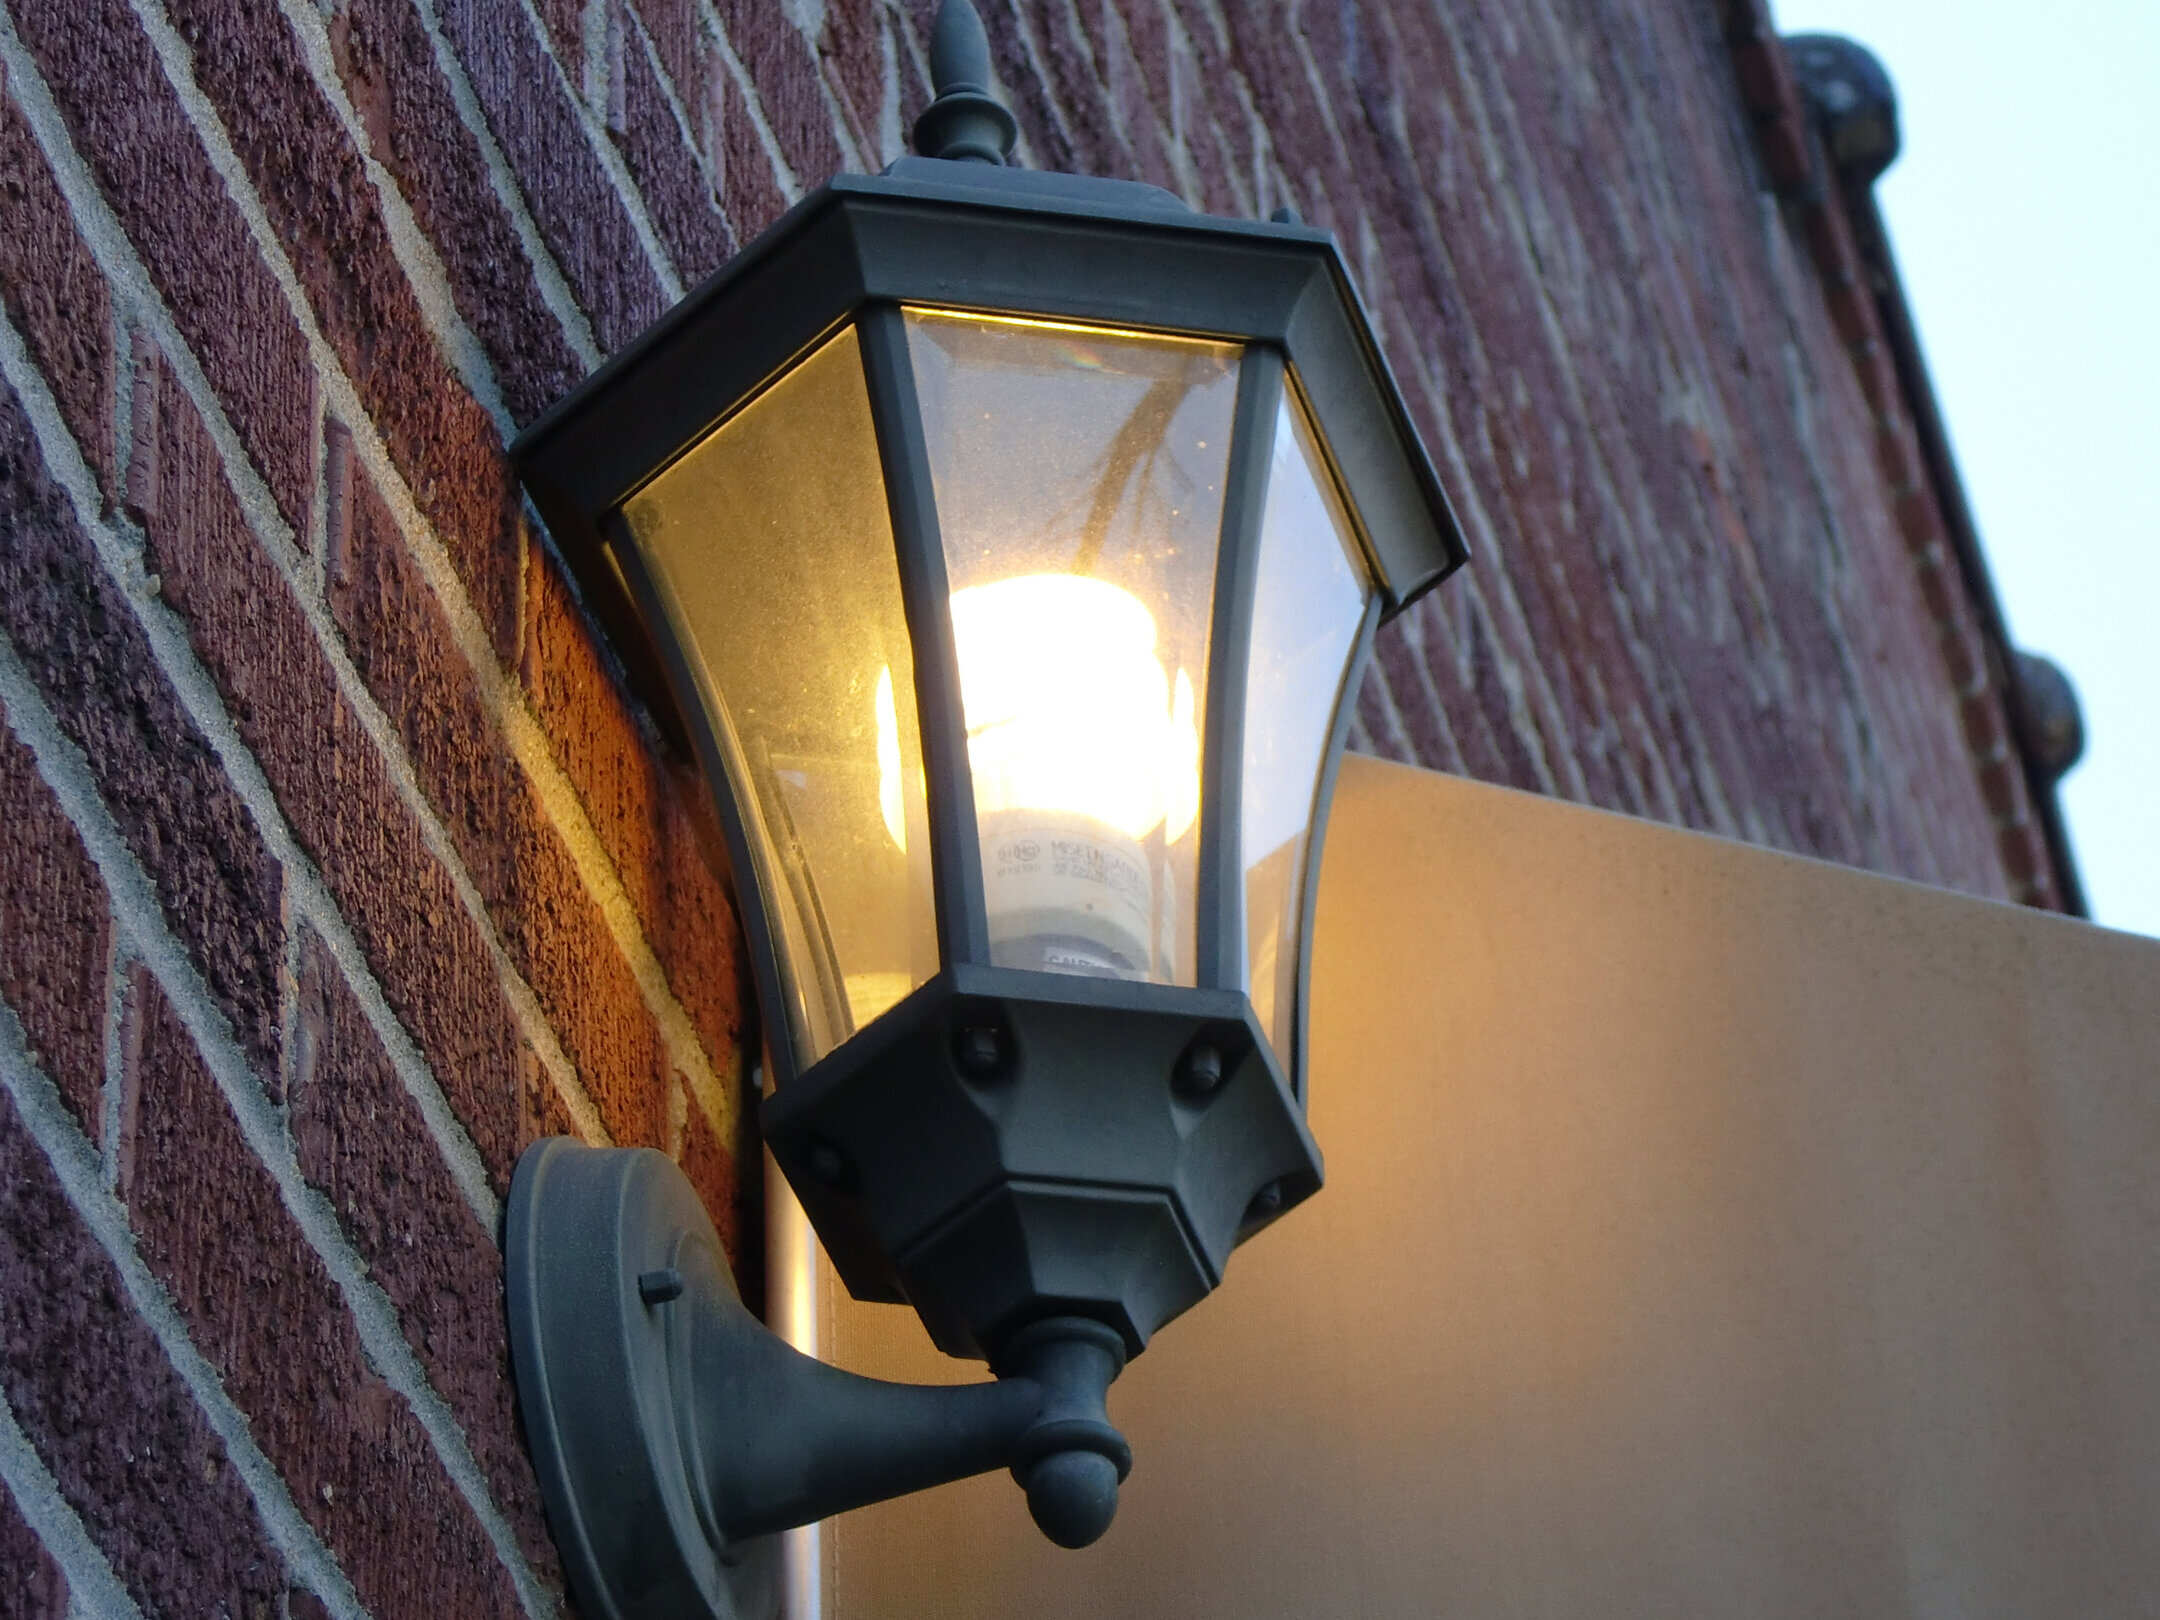 How To Change Outdoor Sensor Light Bulb